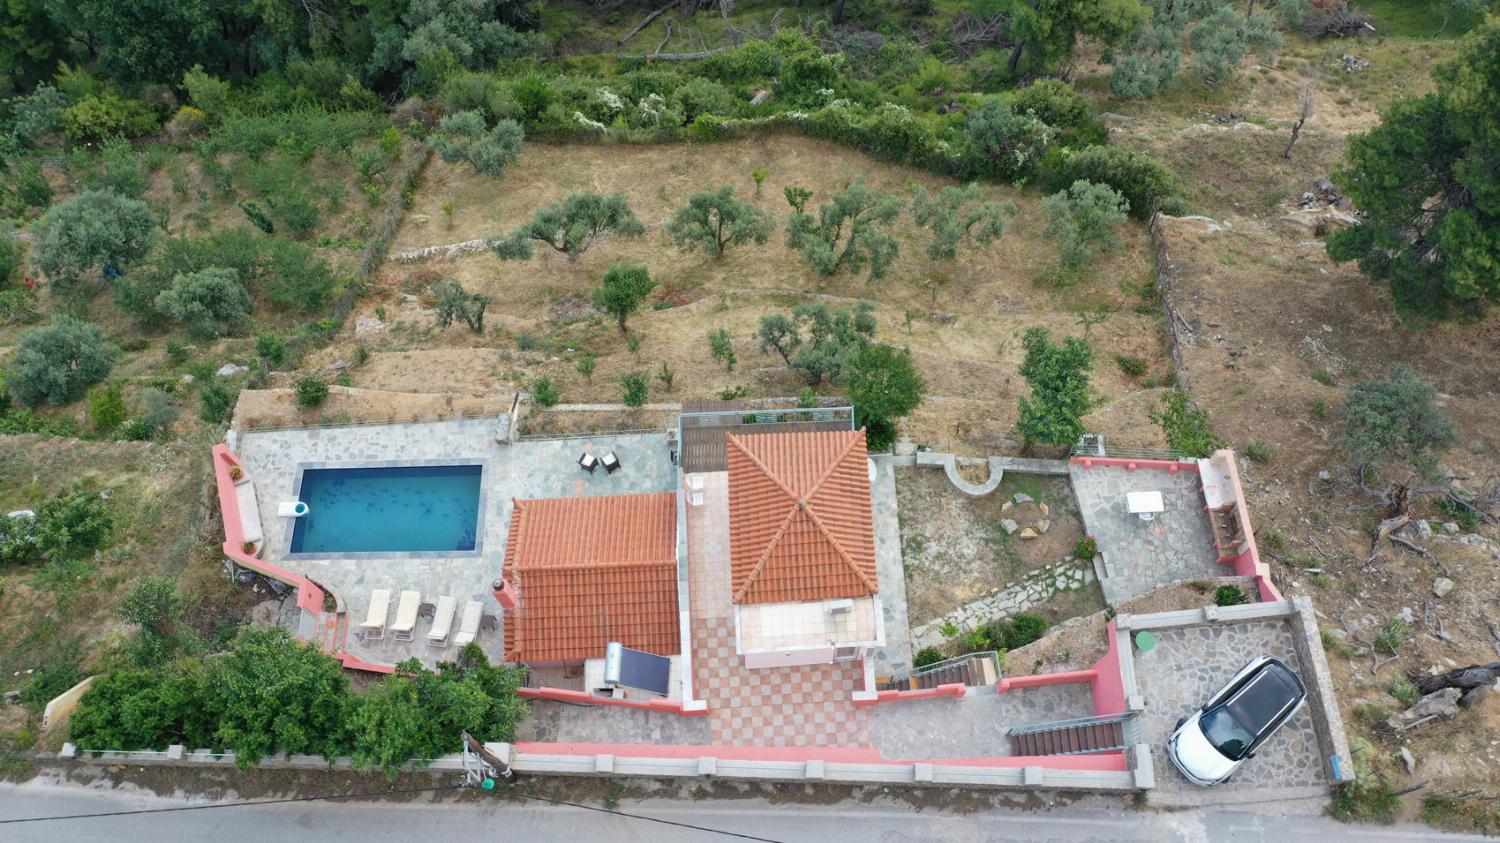 Aerial view showing location of Villa Margarita